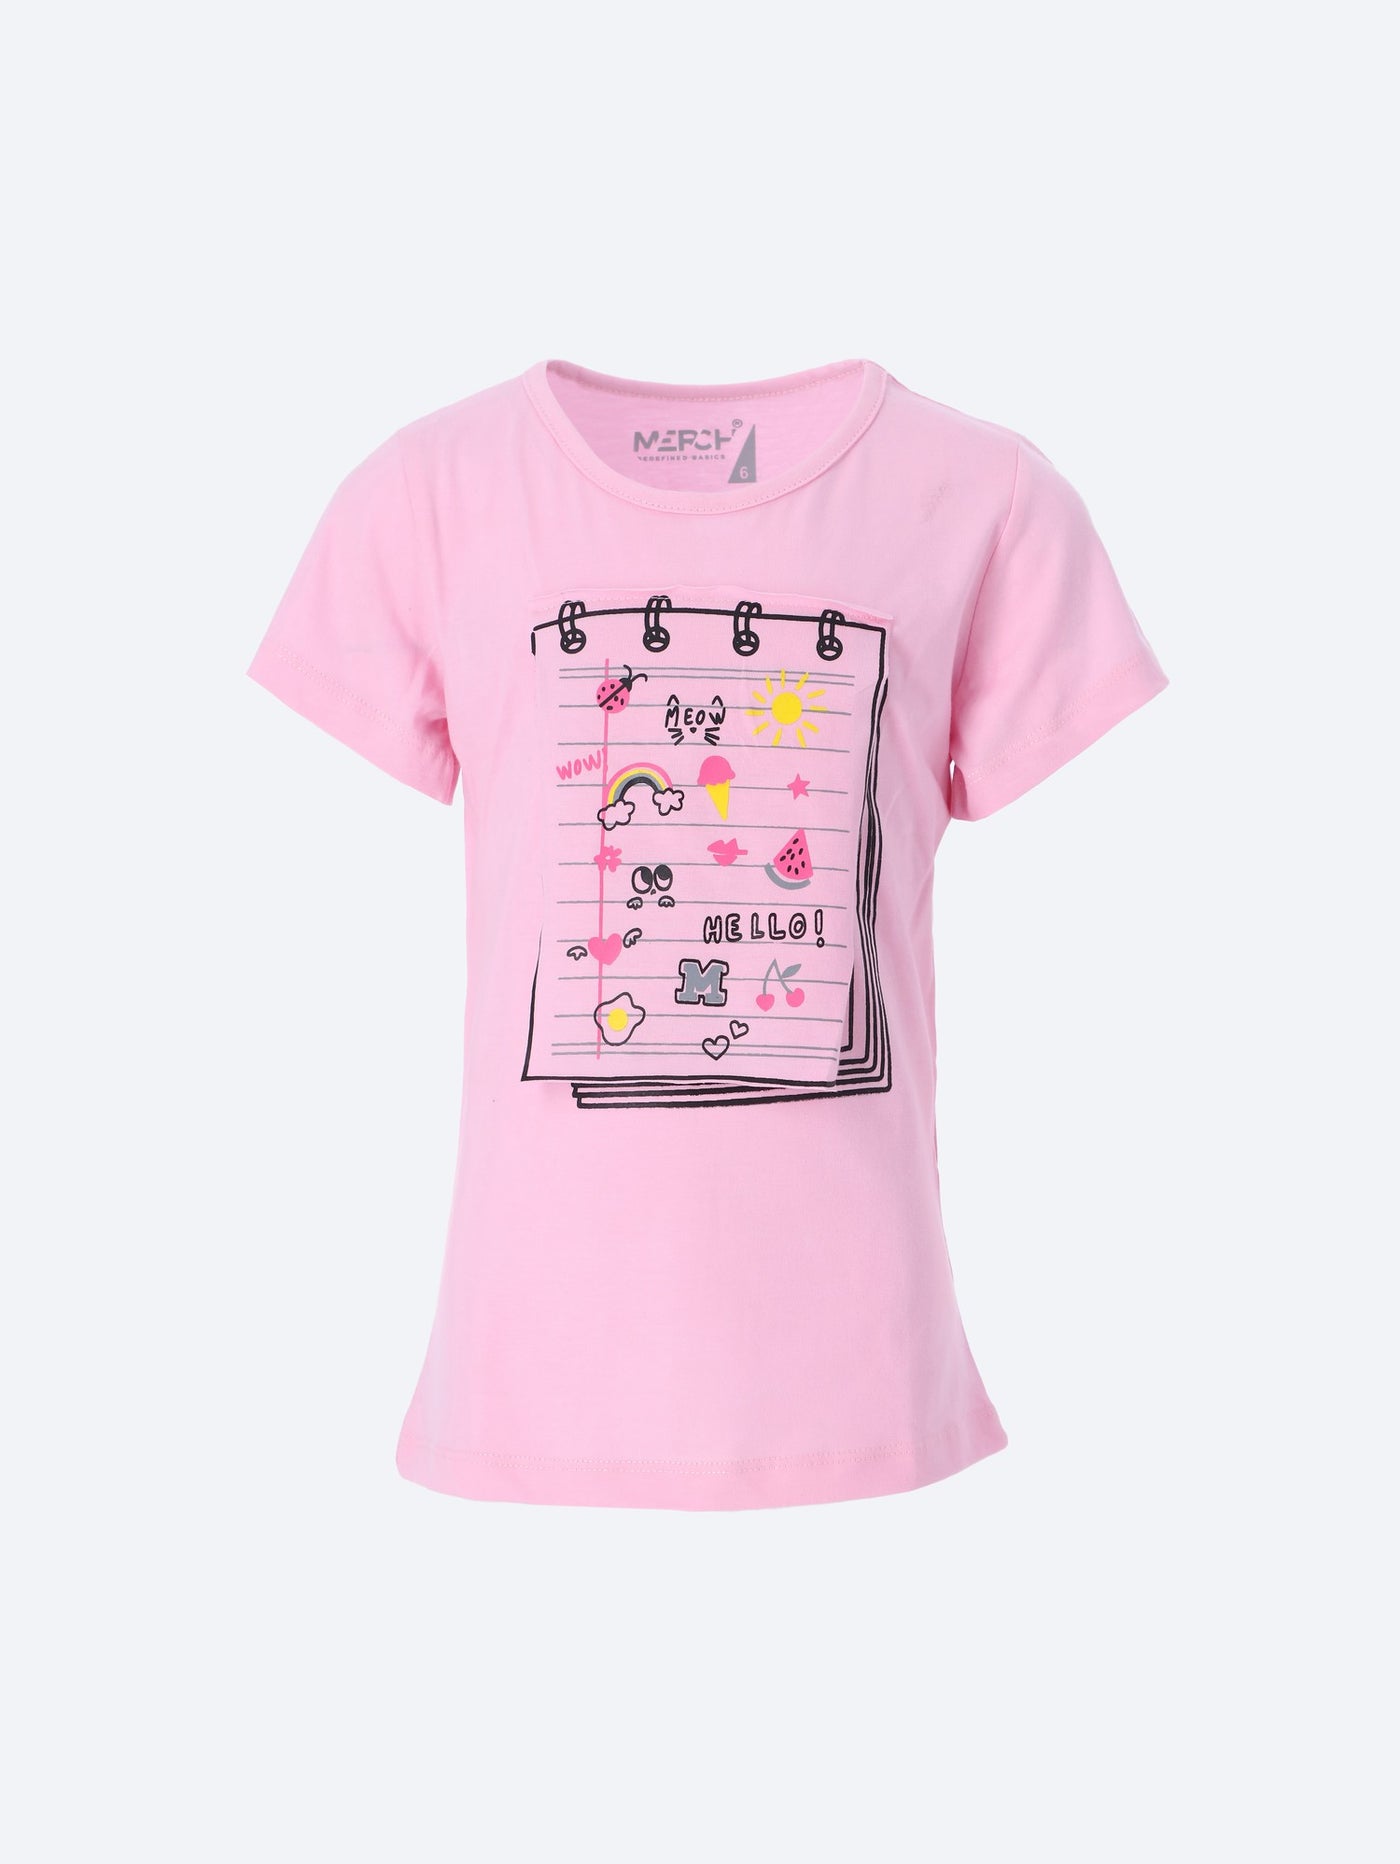 Merch Kids Girls T-shirt Printed